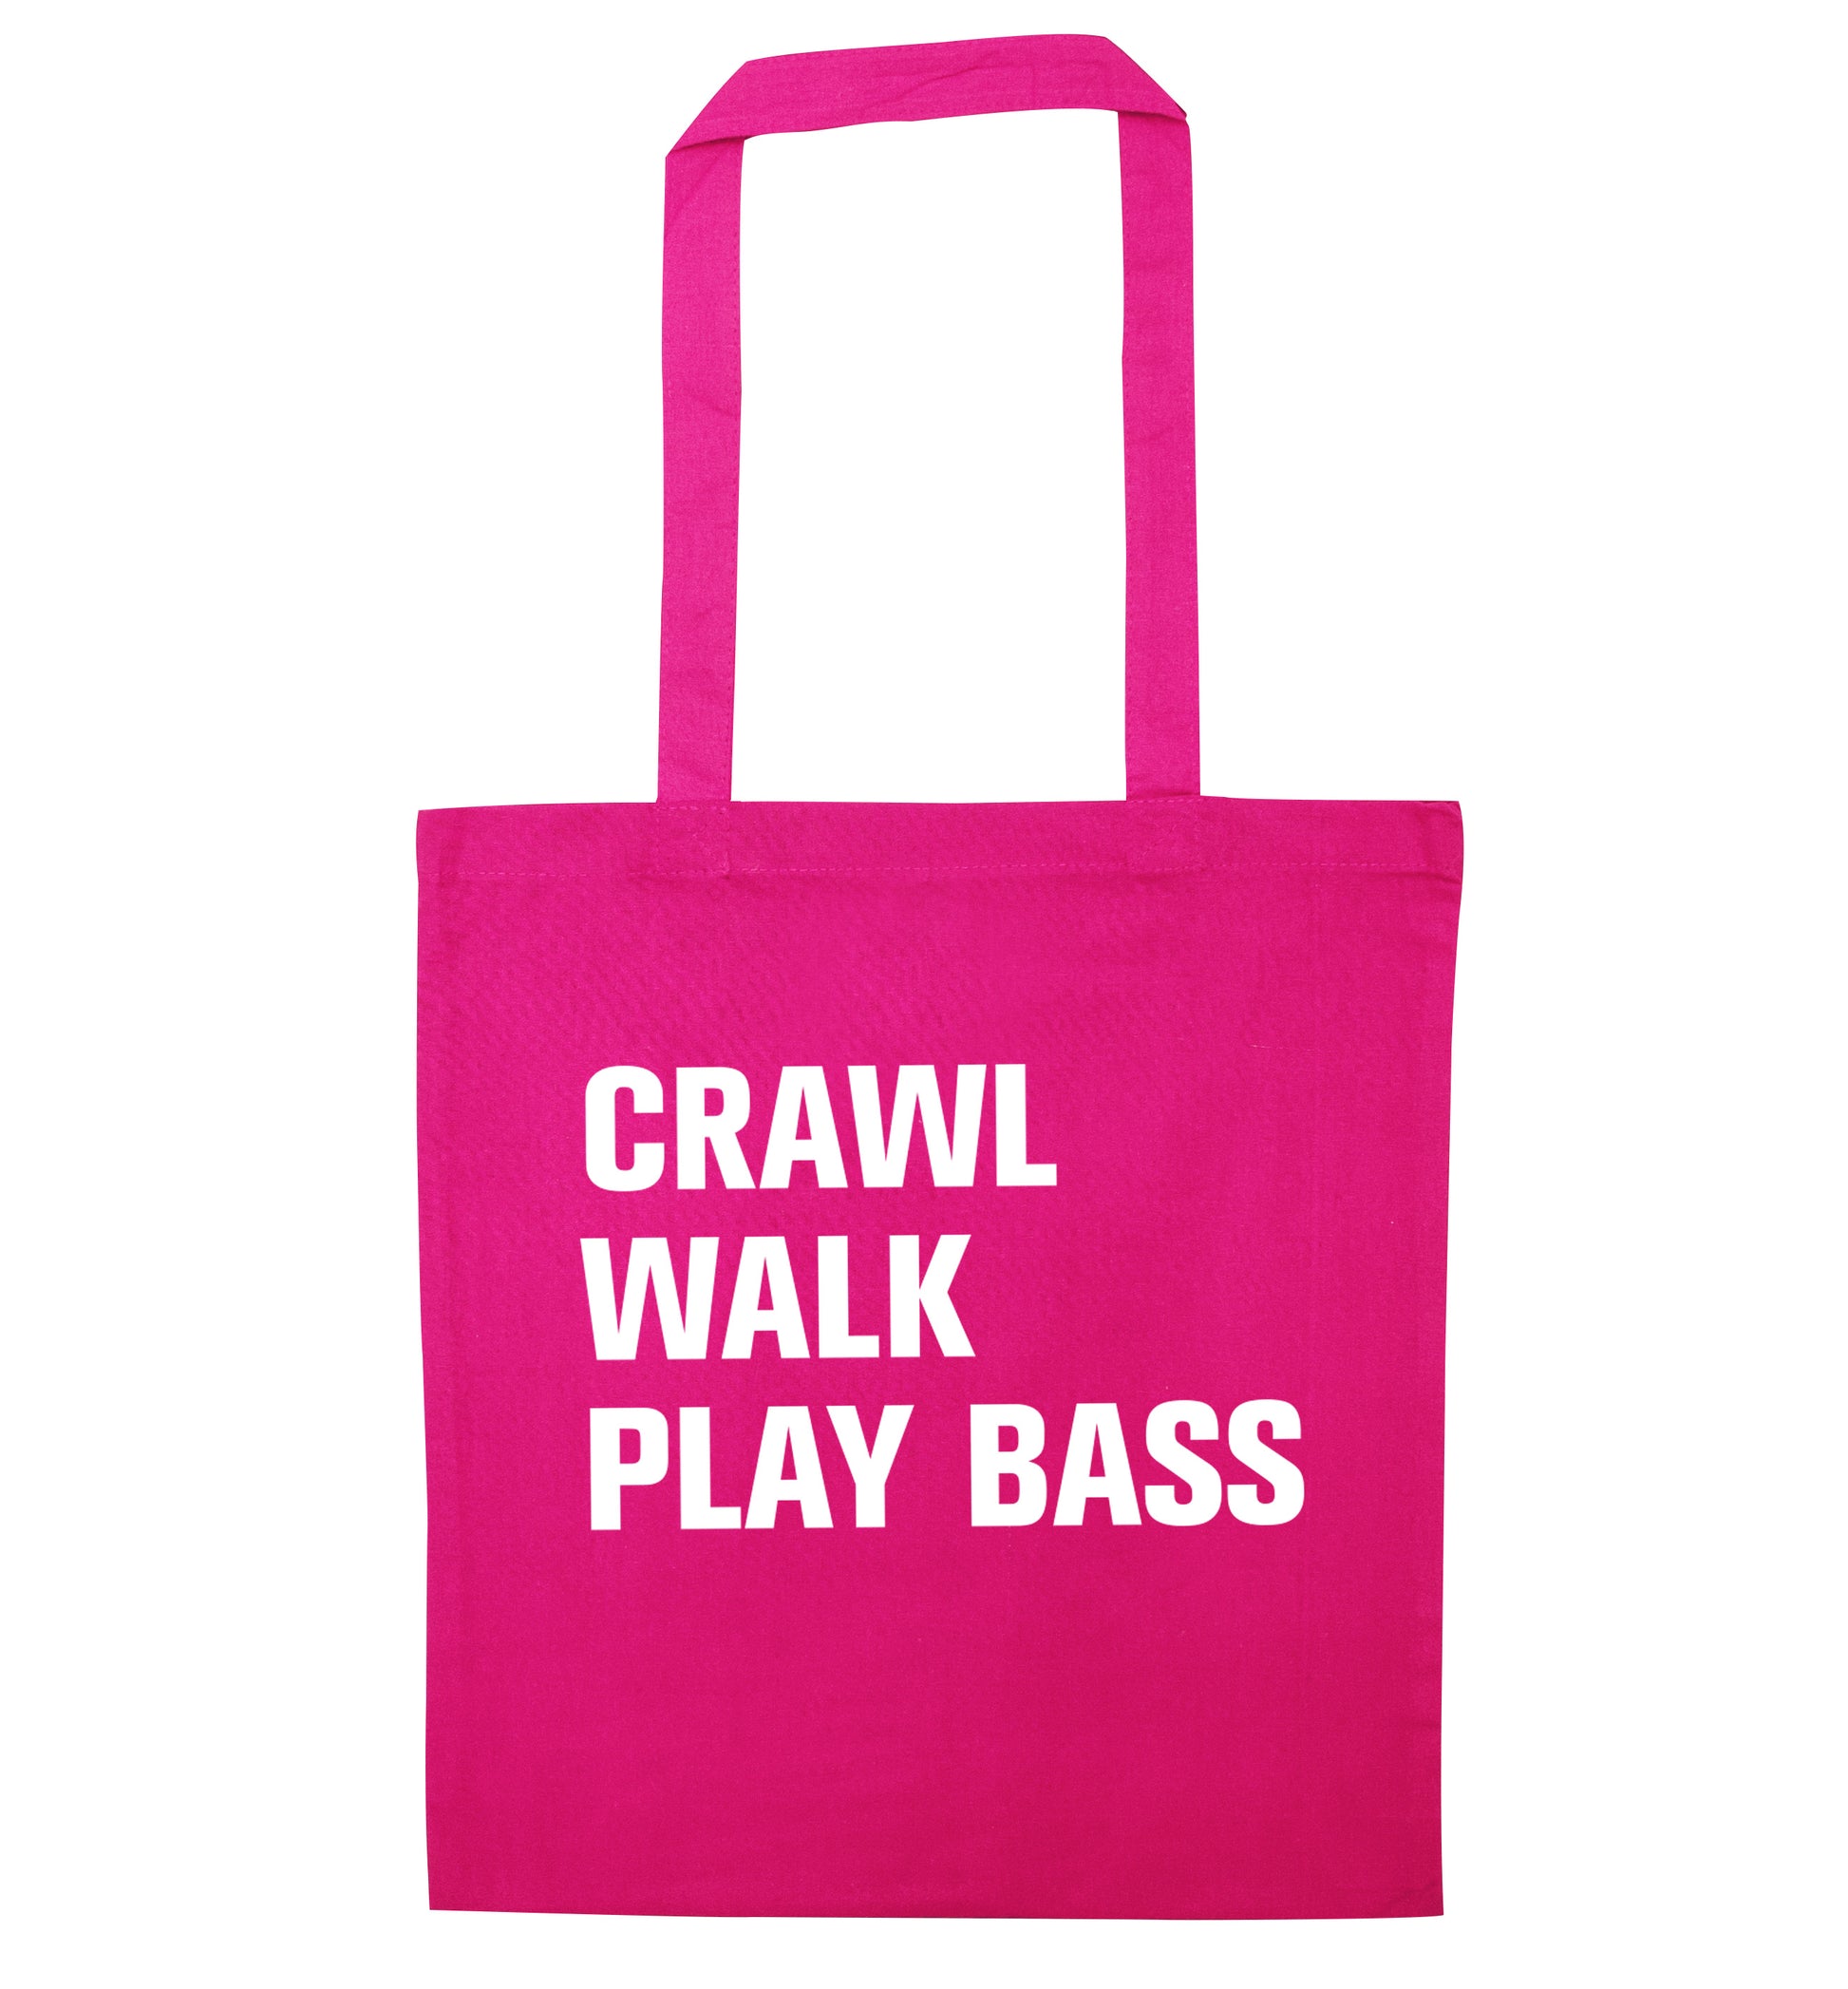 Crawl Walk Play Bass pink tote bag